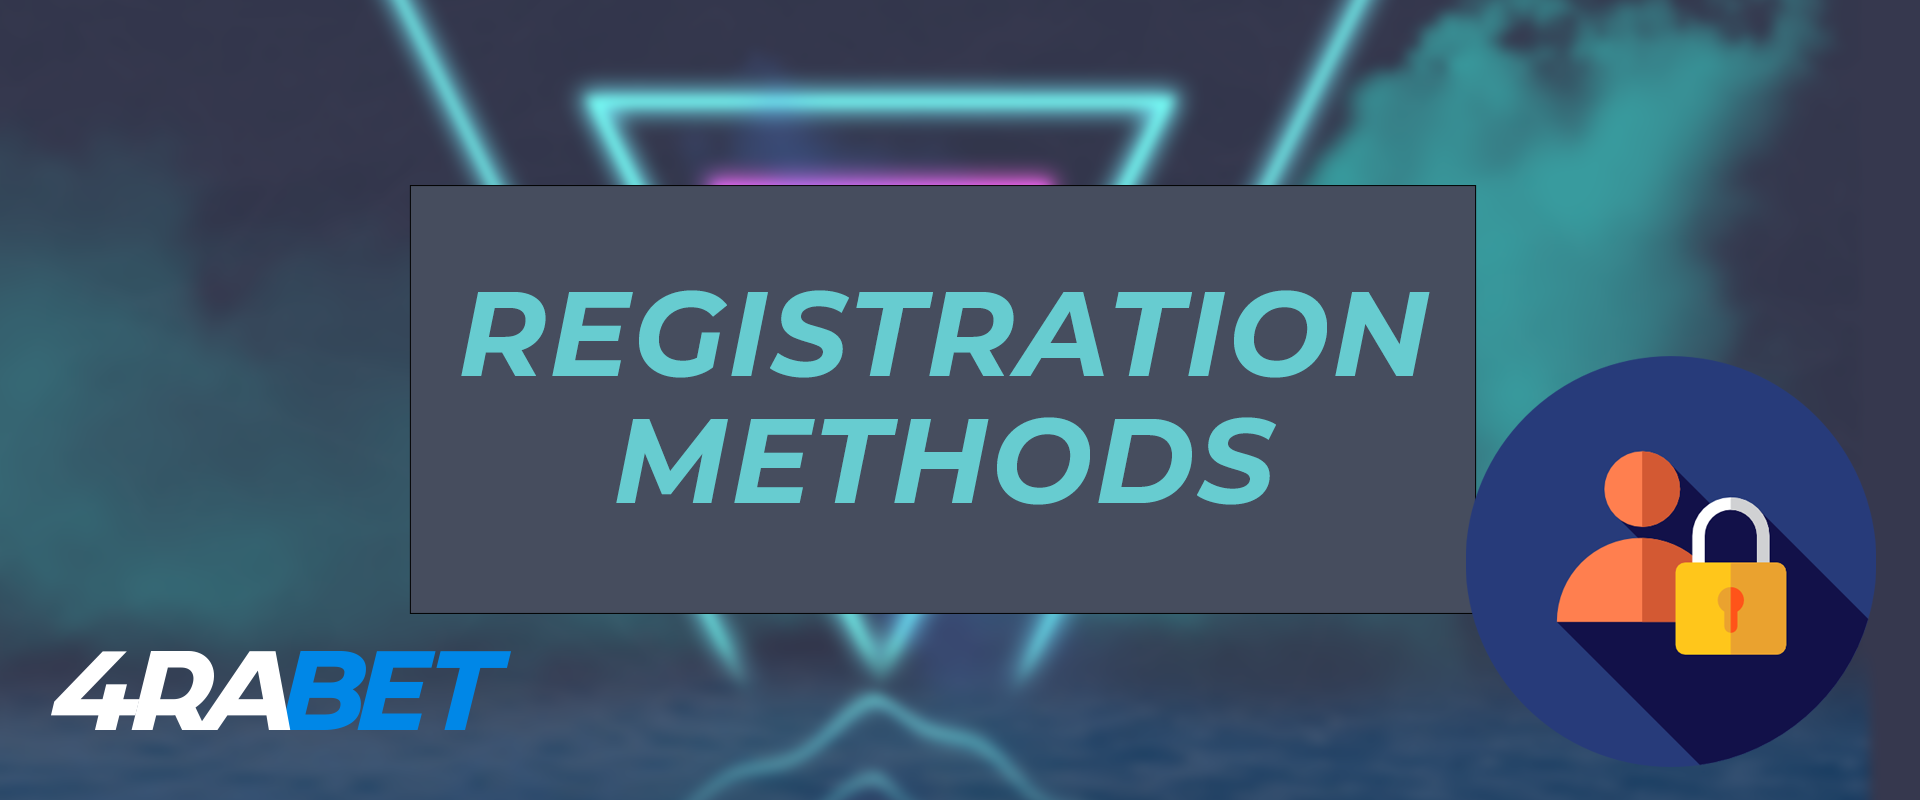 All registration methods on the 4rabet.